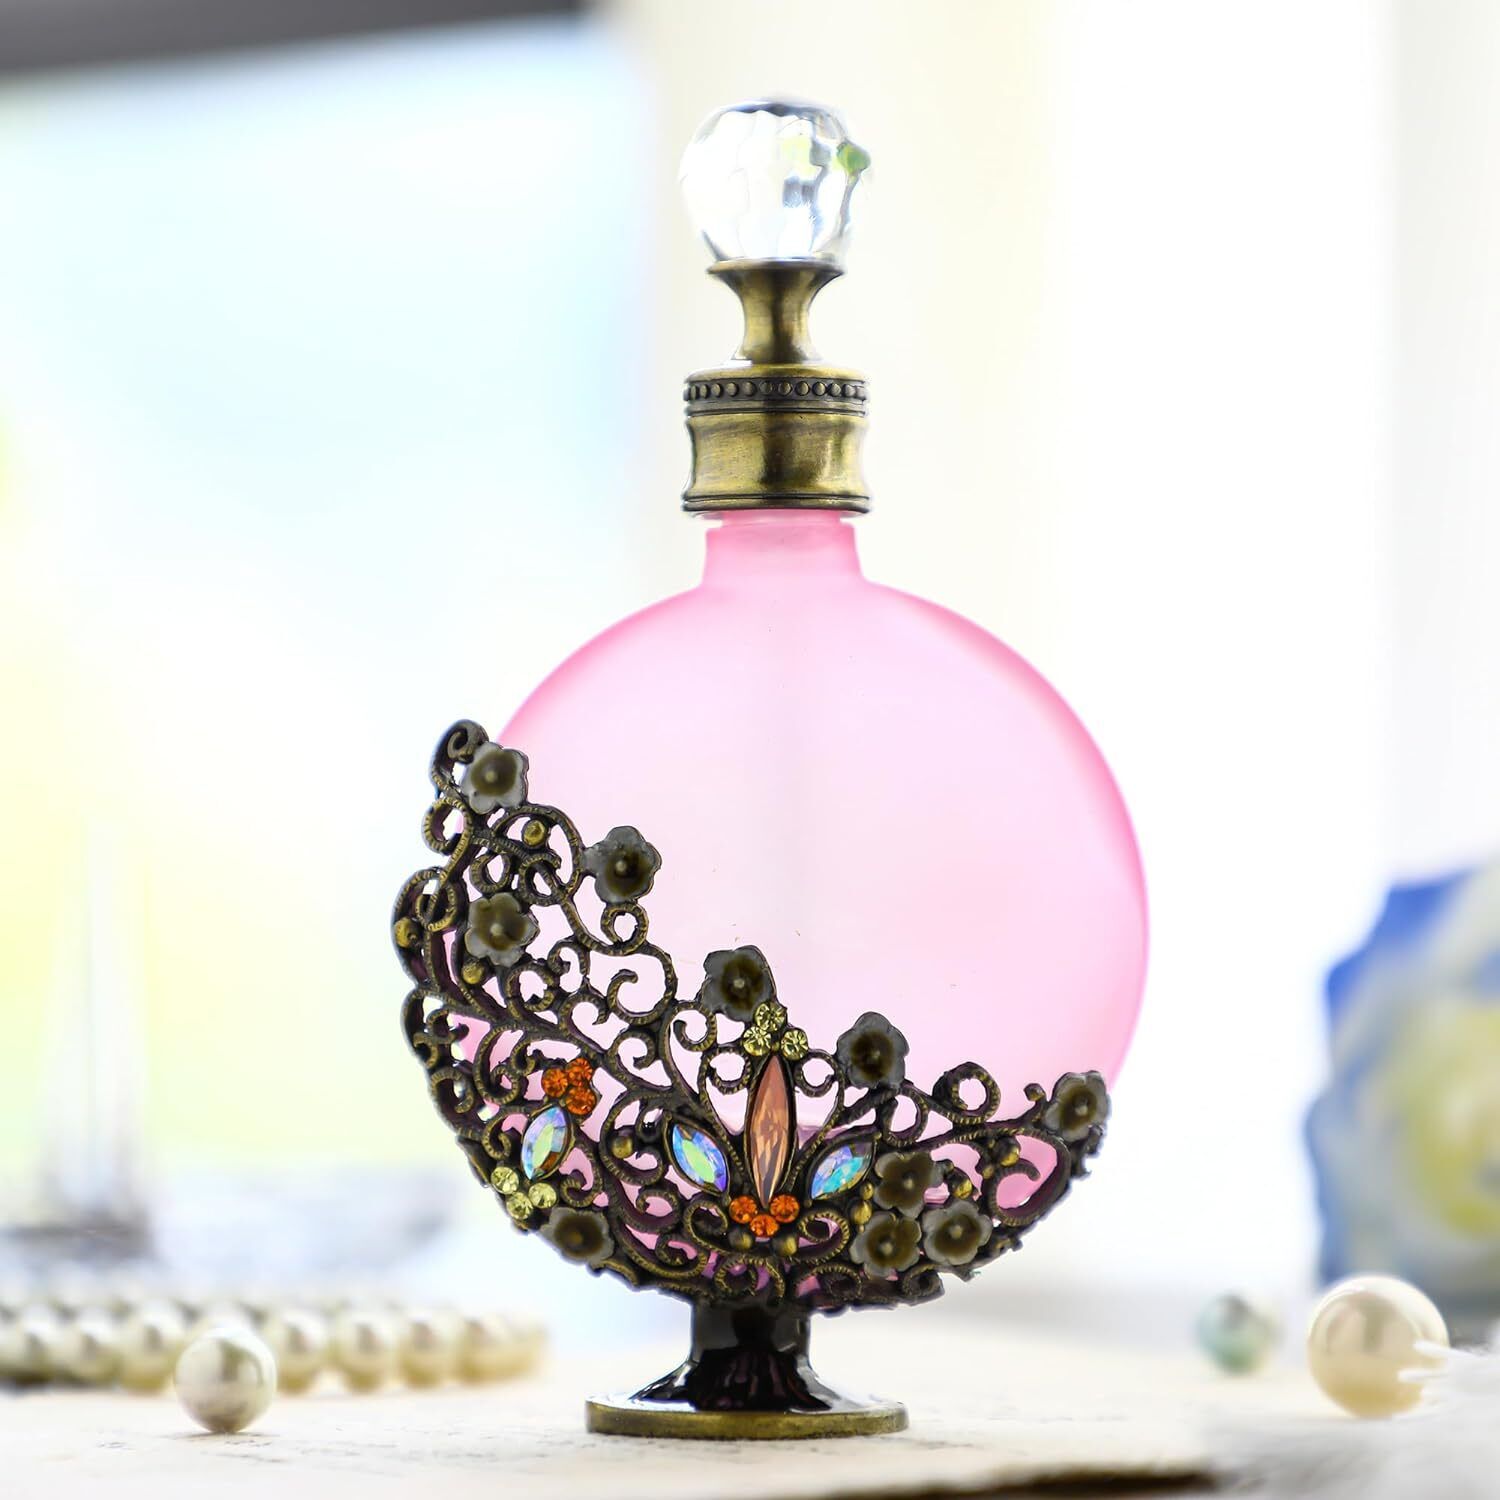 30ml Antique Victoria Curved Crystal Perfume Bottle FancyRetroFlatBodyRefillable